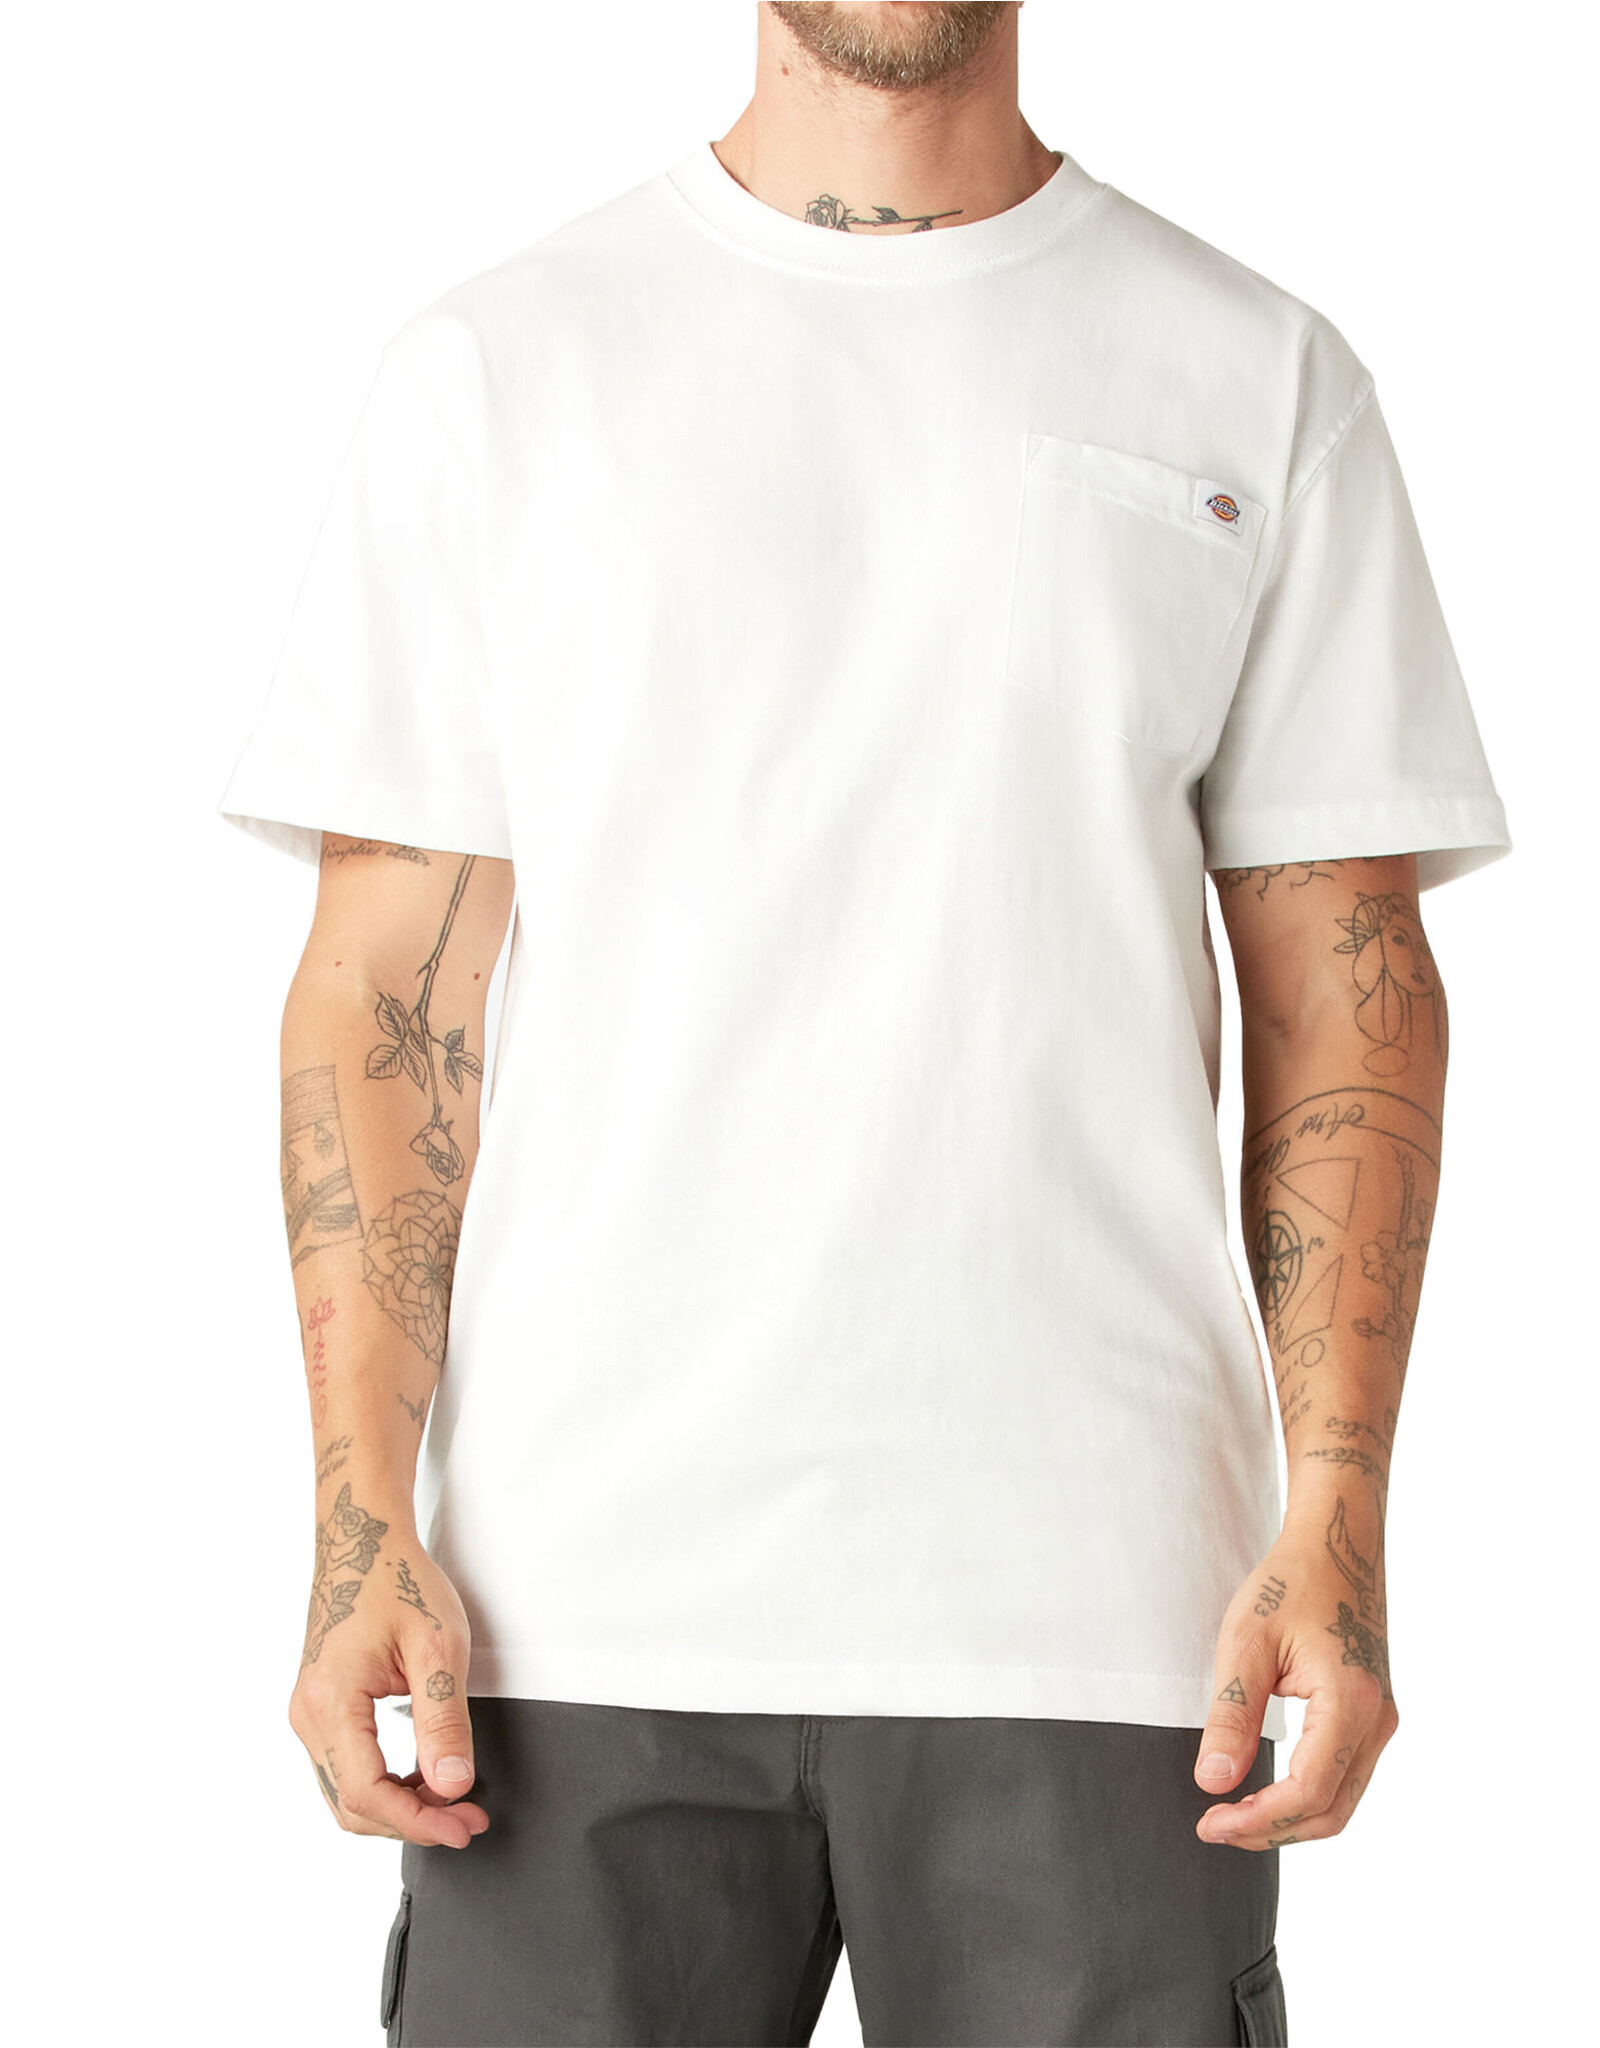 DICKIES Heavyweight Short Sleeve Pocket T-Shirt White - WS450WH